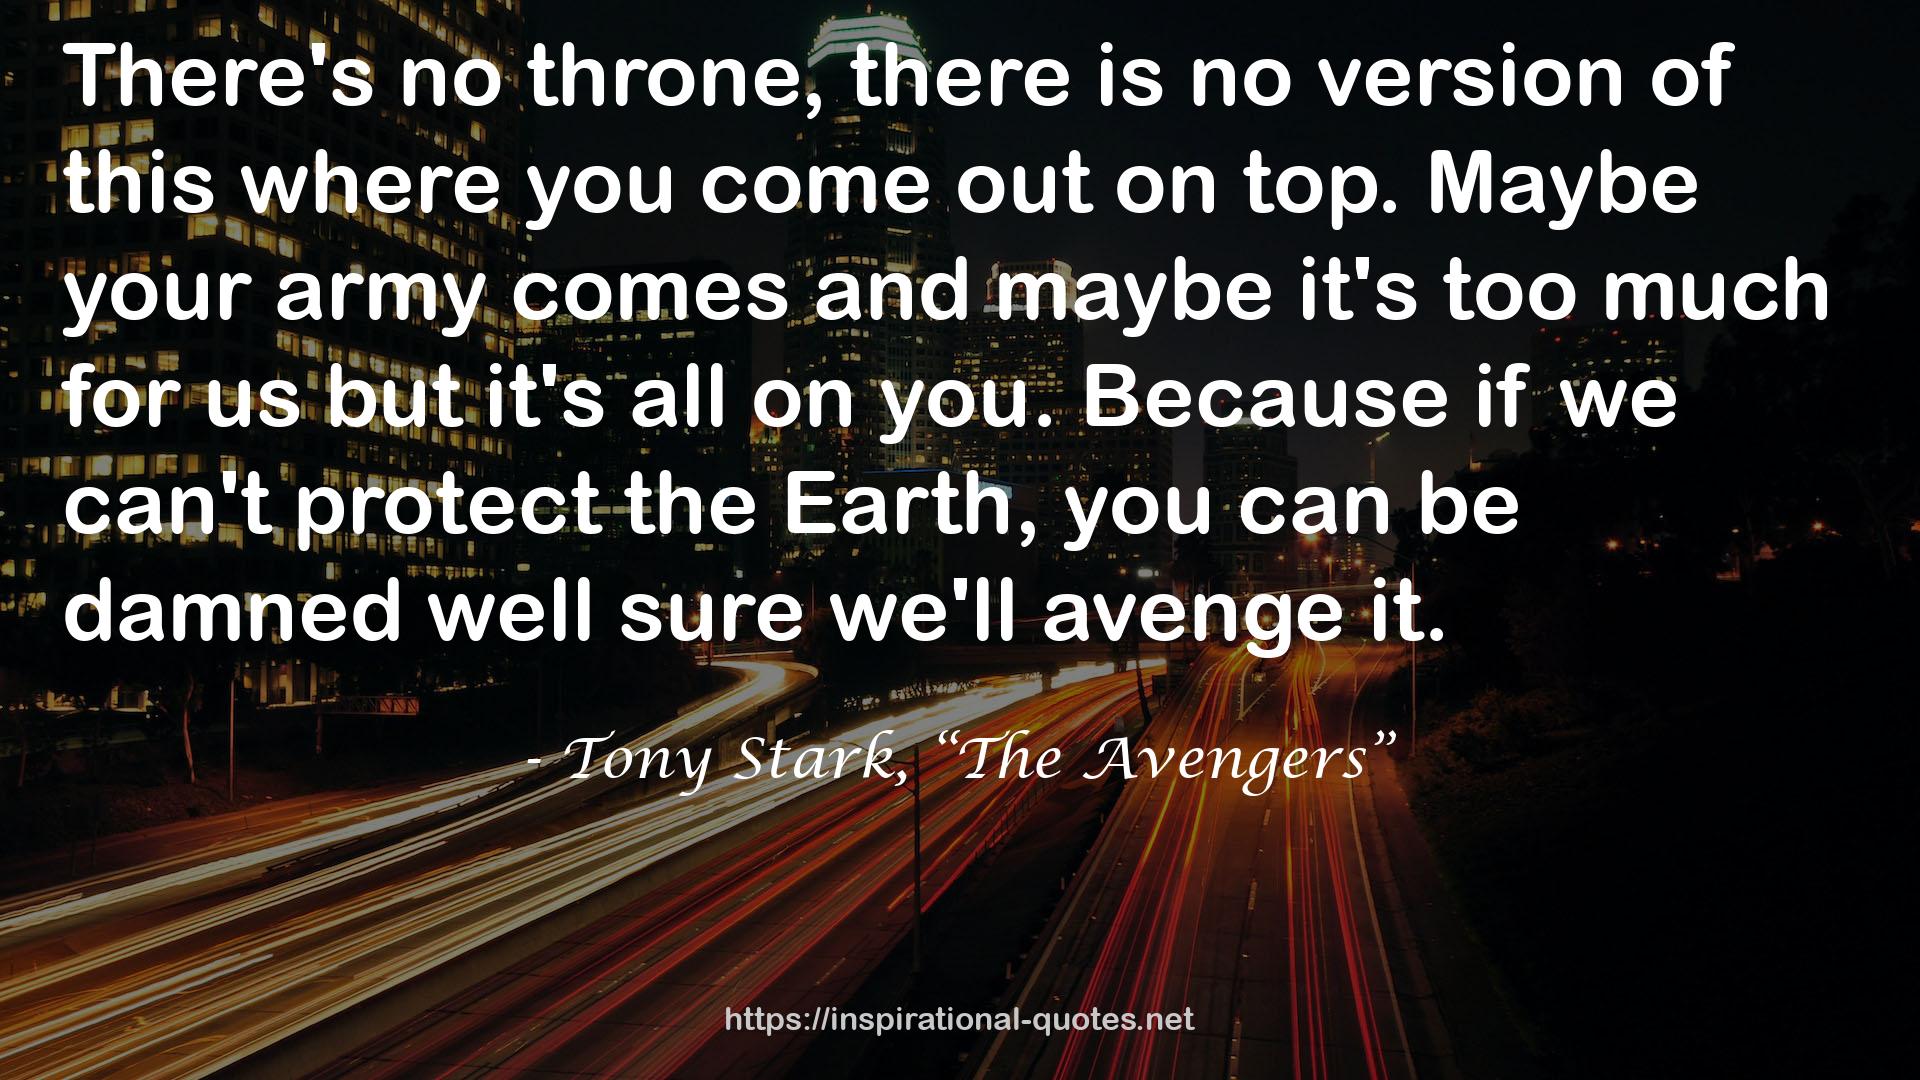 Tony Stark, “The Avengers” QUOTES